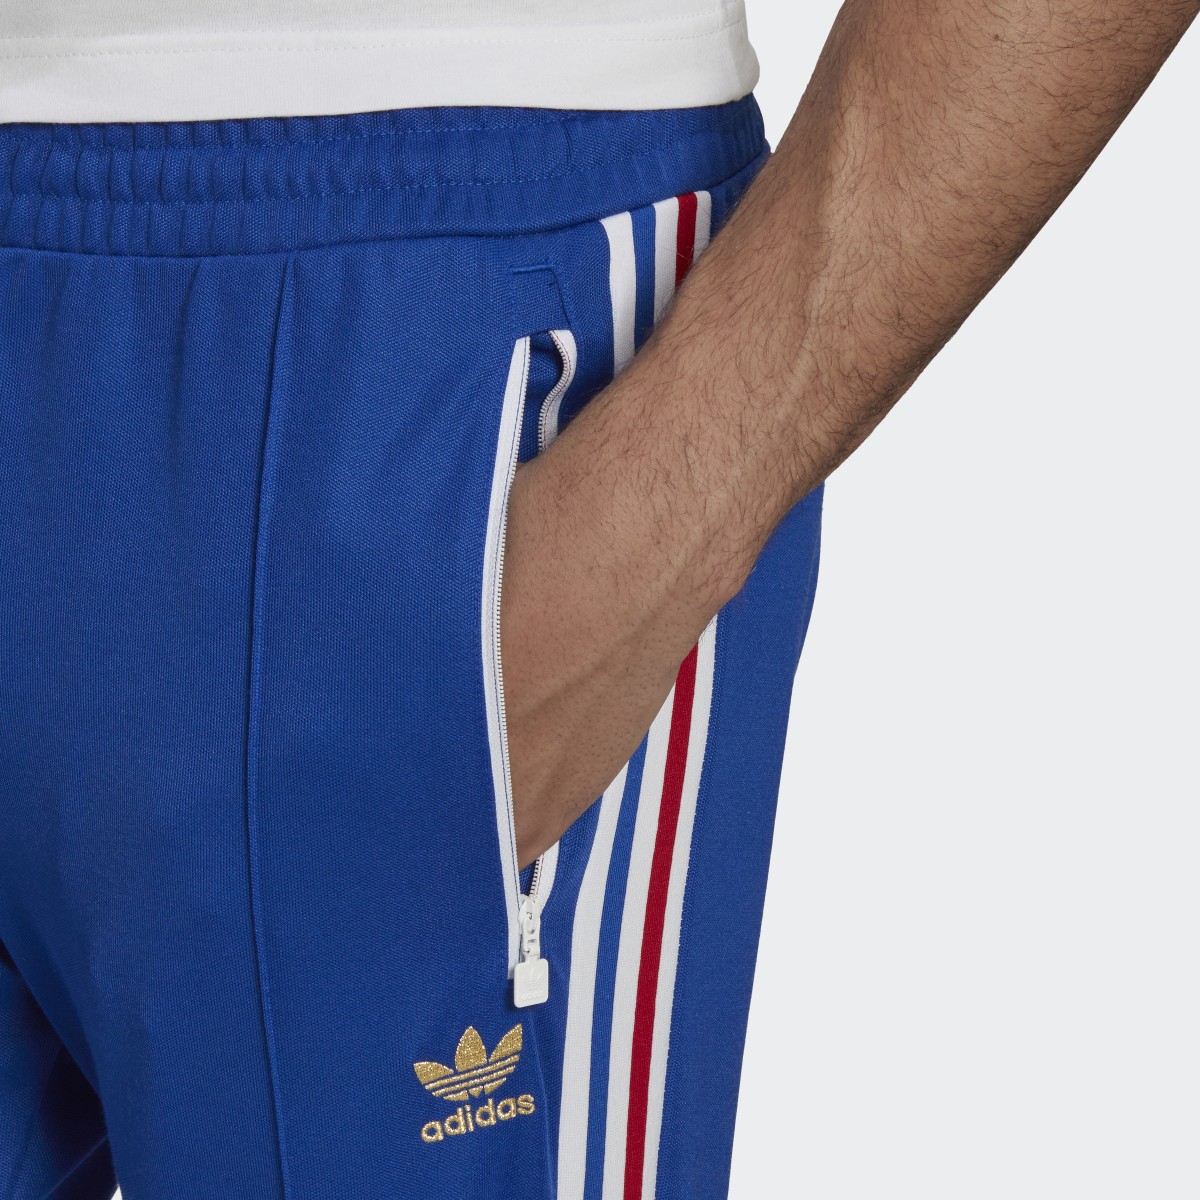 Adidas Beckenbauer Track Pants. 5